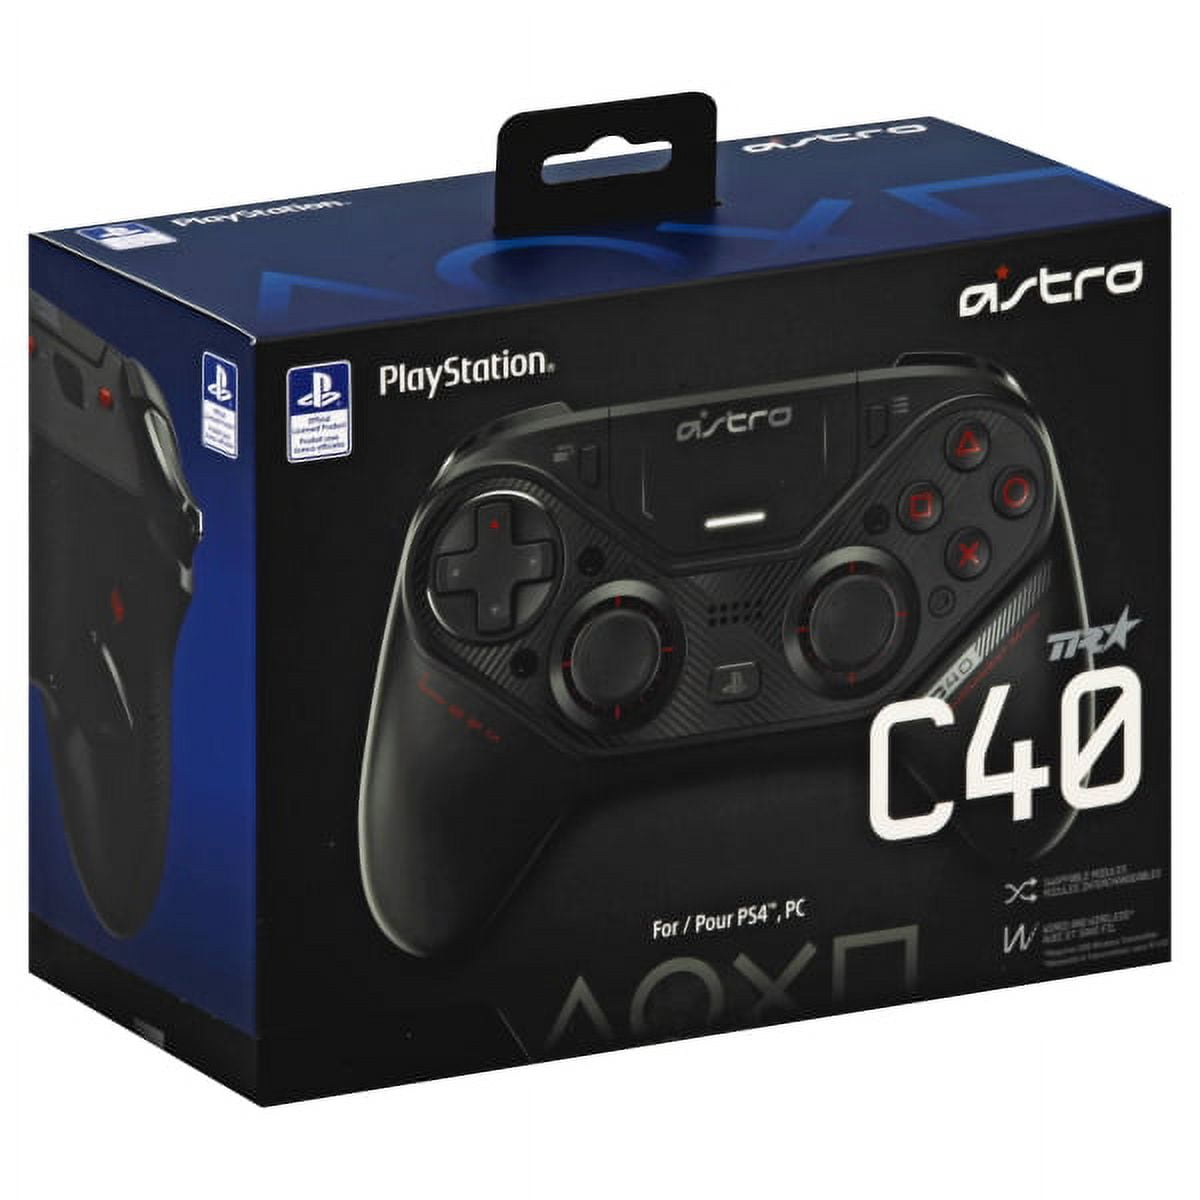 Astro C40 Controller - Walmart.com